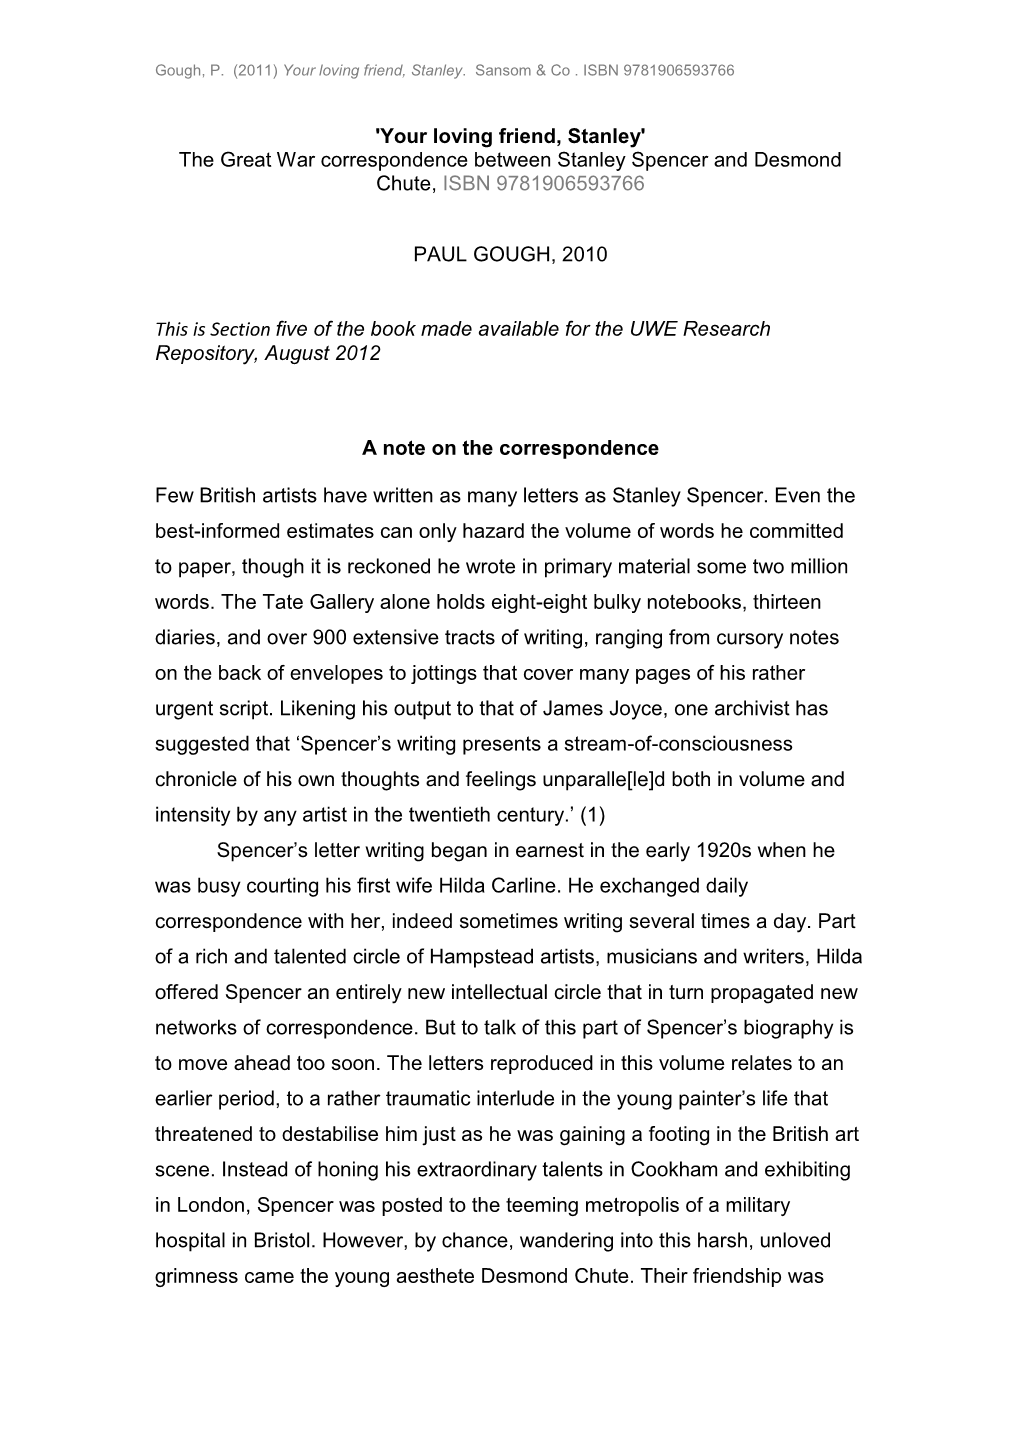 The Great War Correspondence Between Stanley Spencer and Desmond Chute, ISBN 9781906593766 PAUL GO